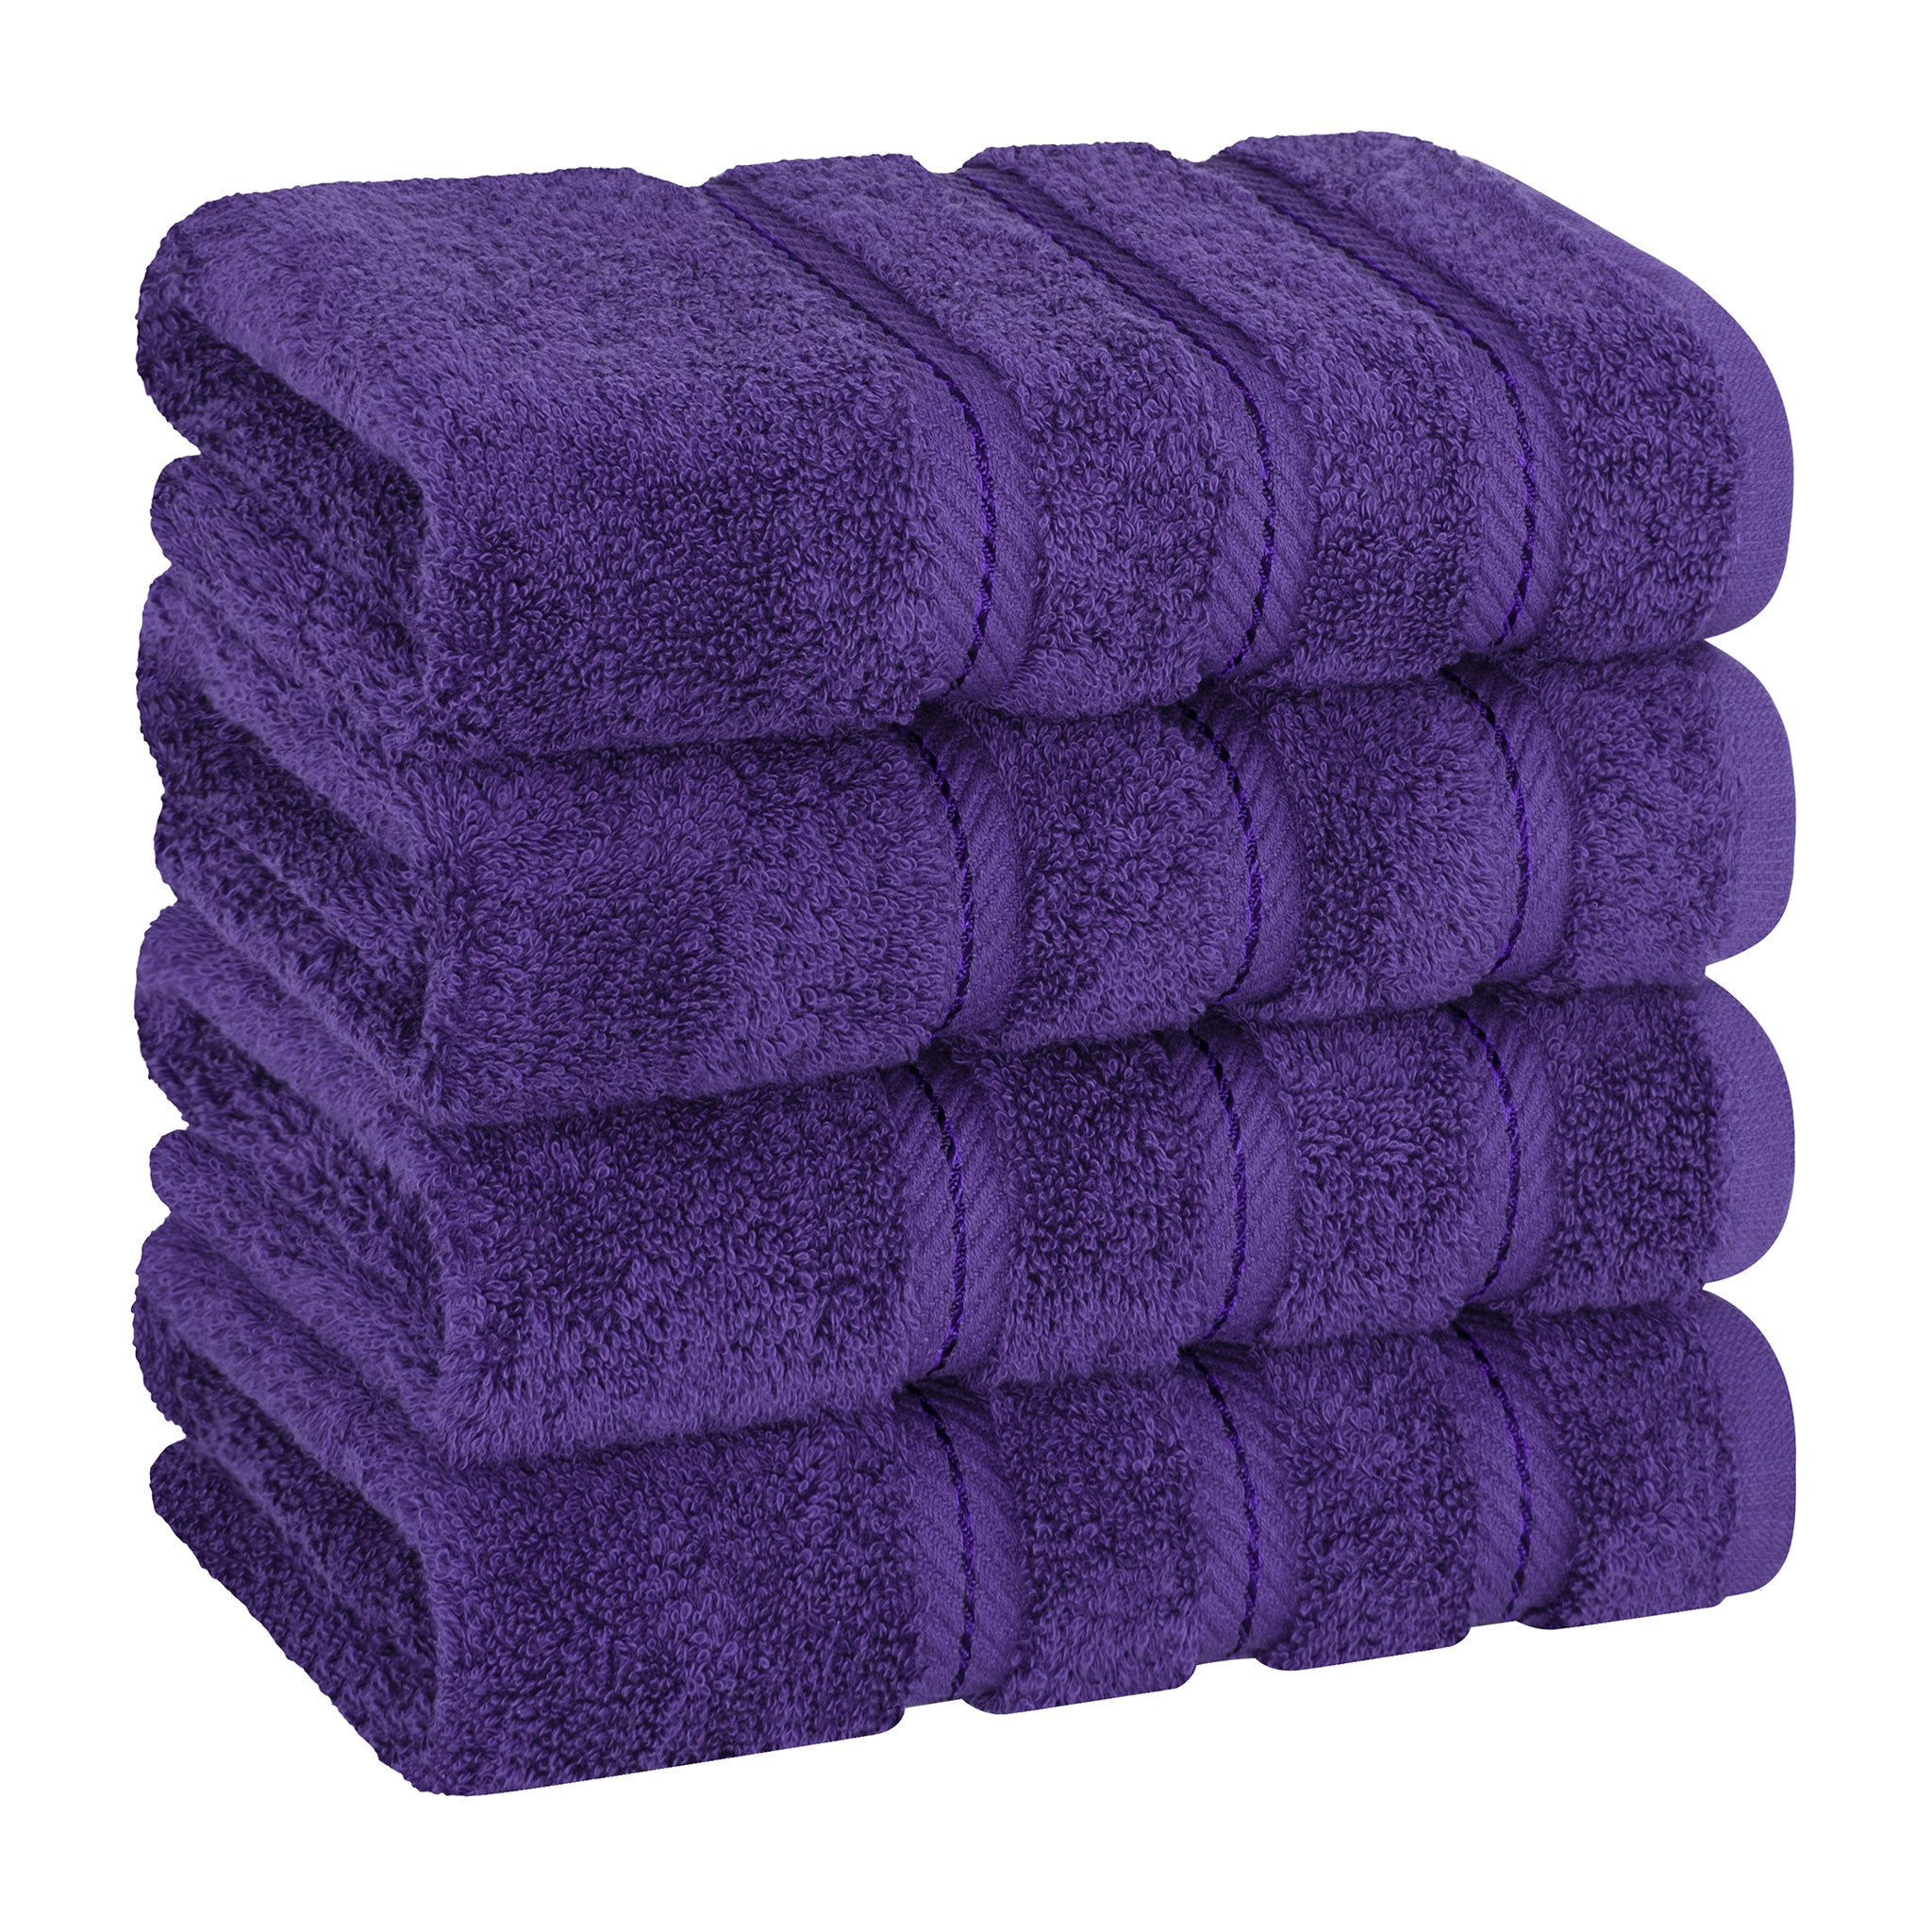 American Soft Linen 100% Turkish Cotton 4 Pack Hand Towel Set Wholesale purple-1